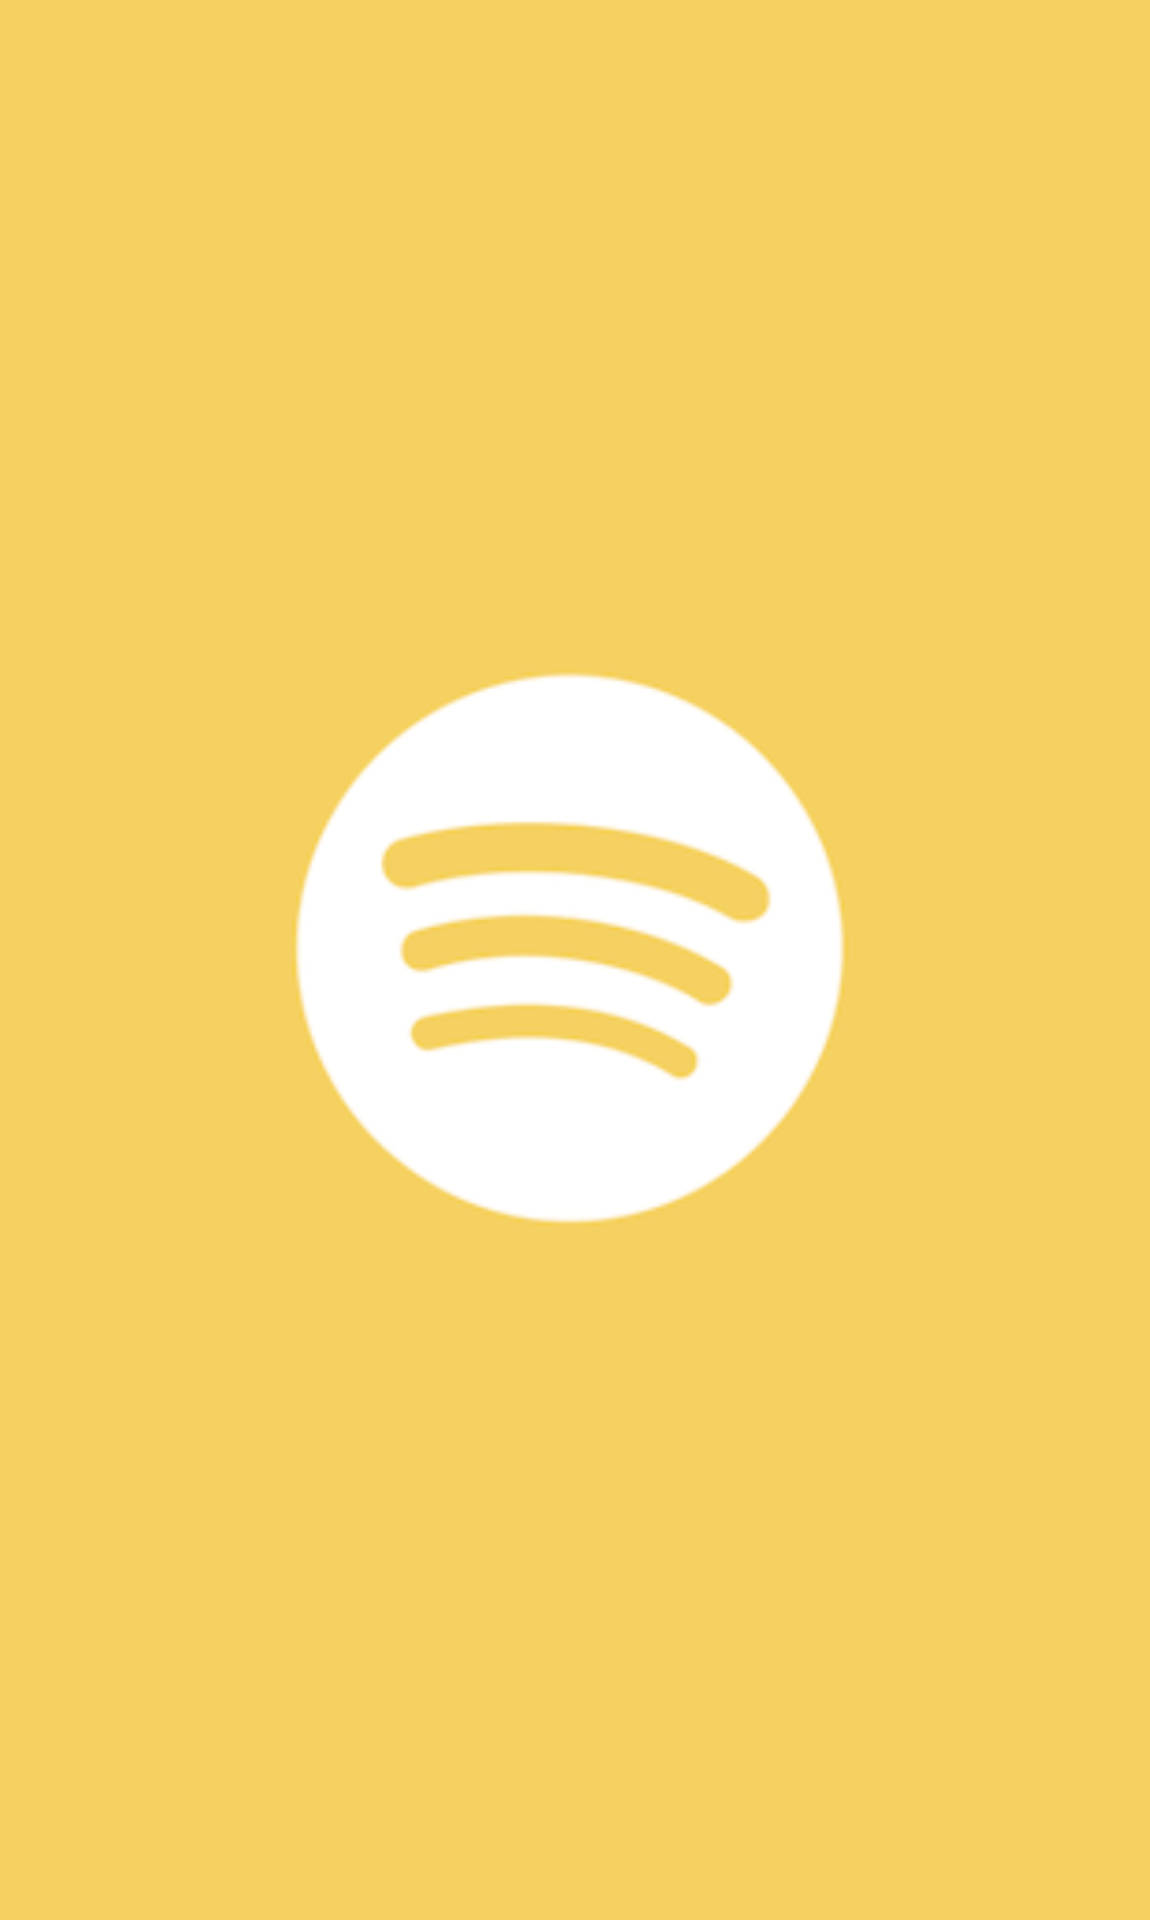 Minimalist Spotify Yellow Wallpaper